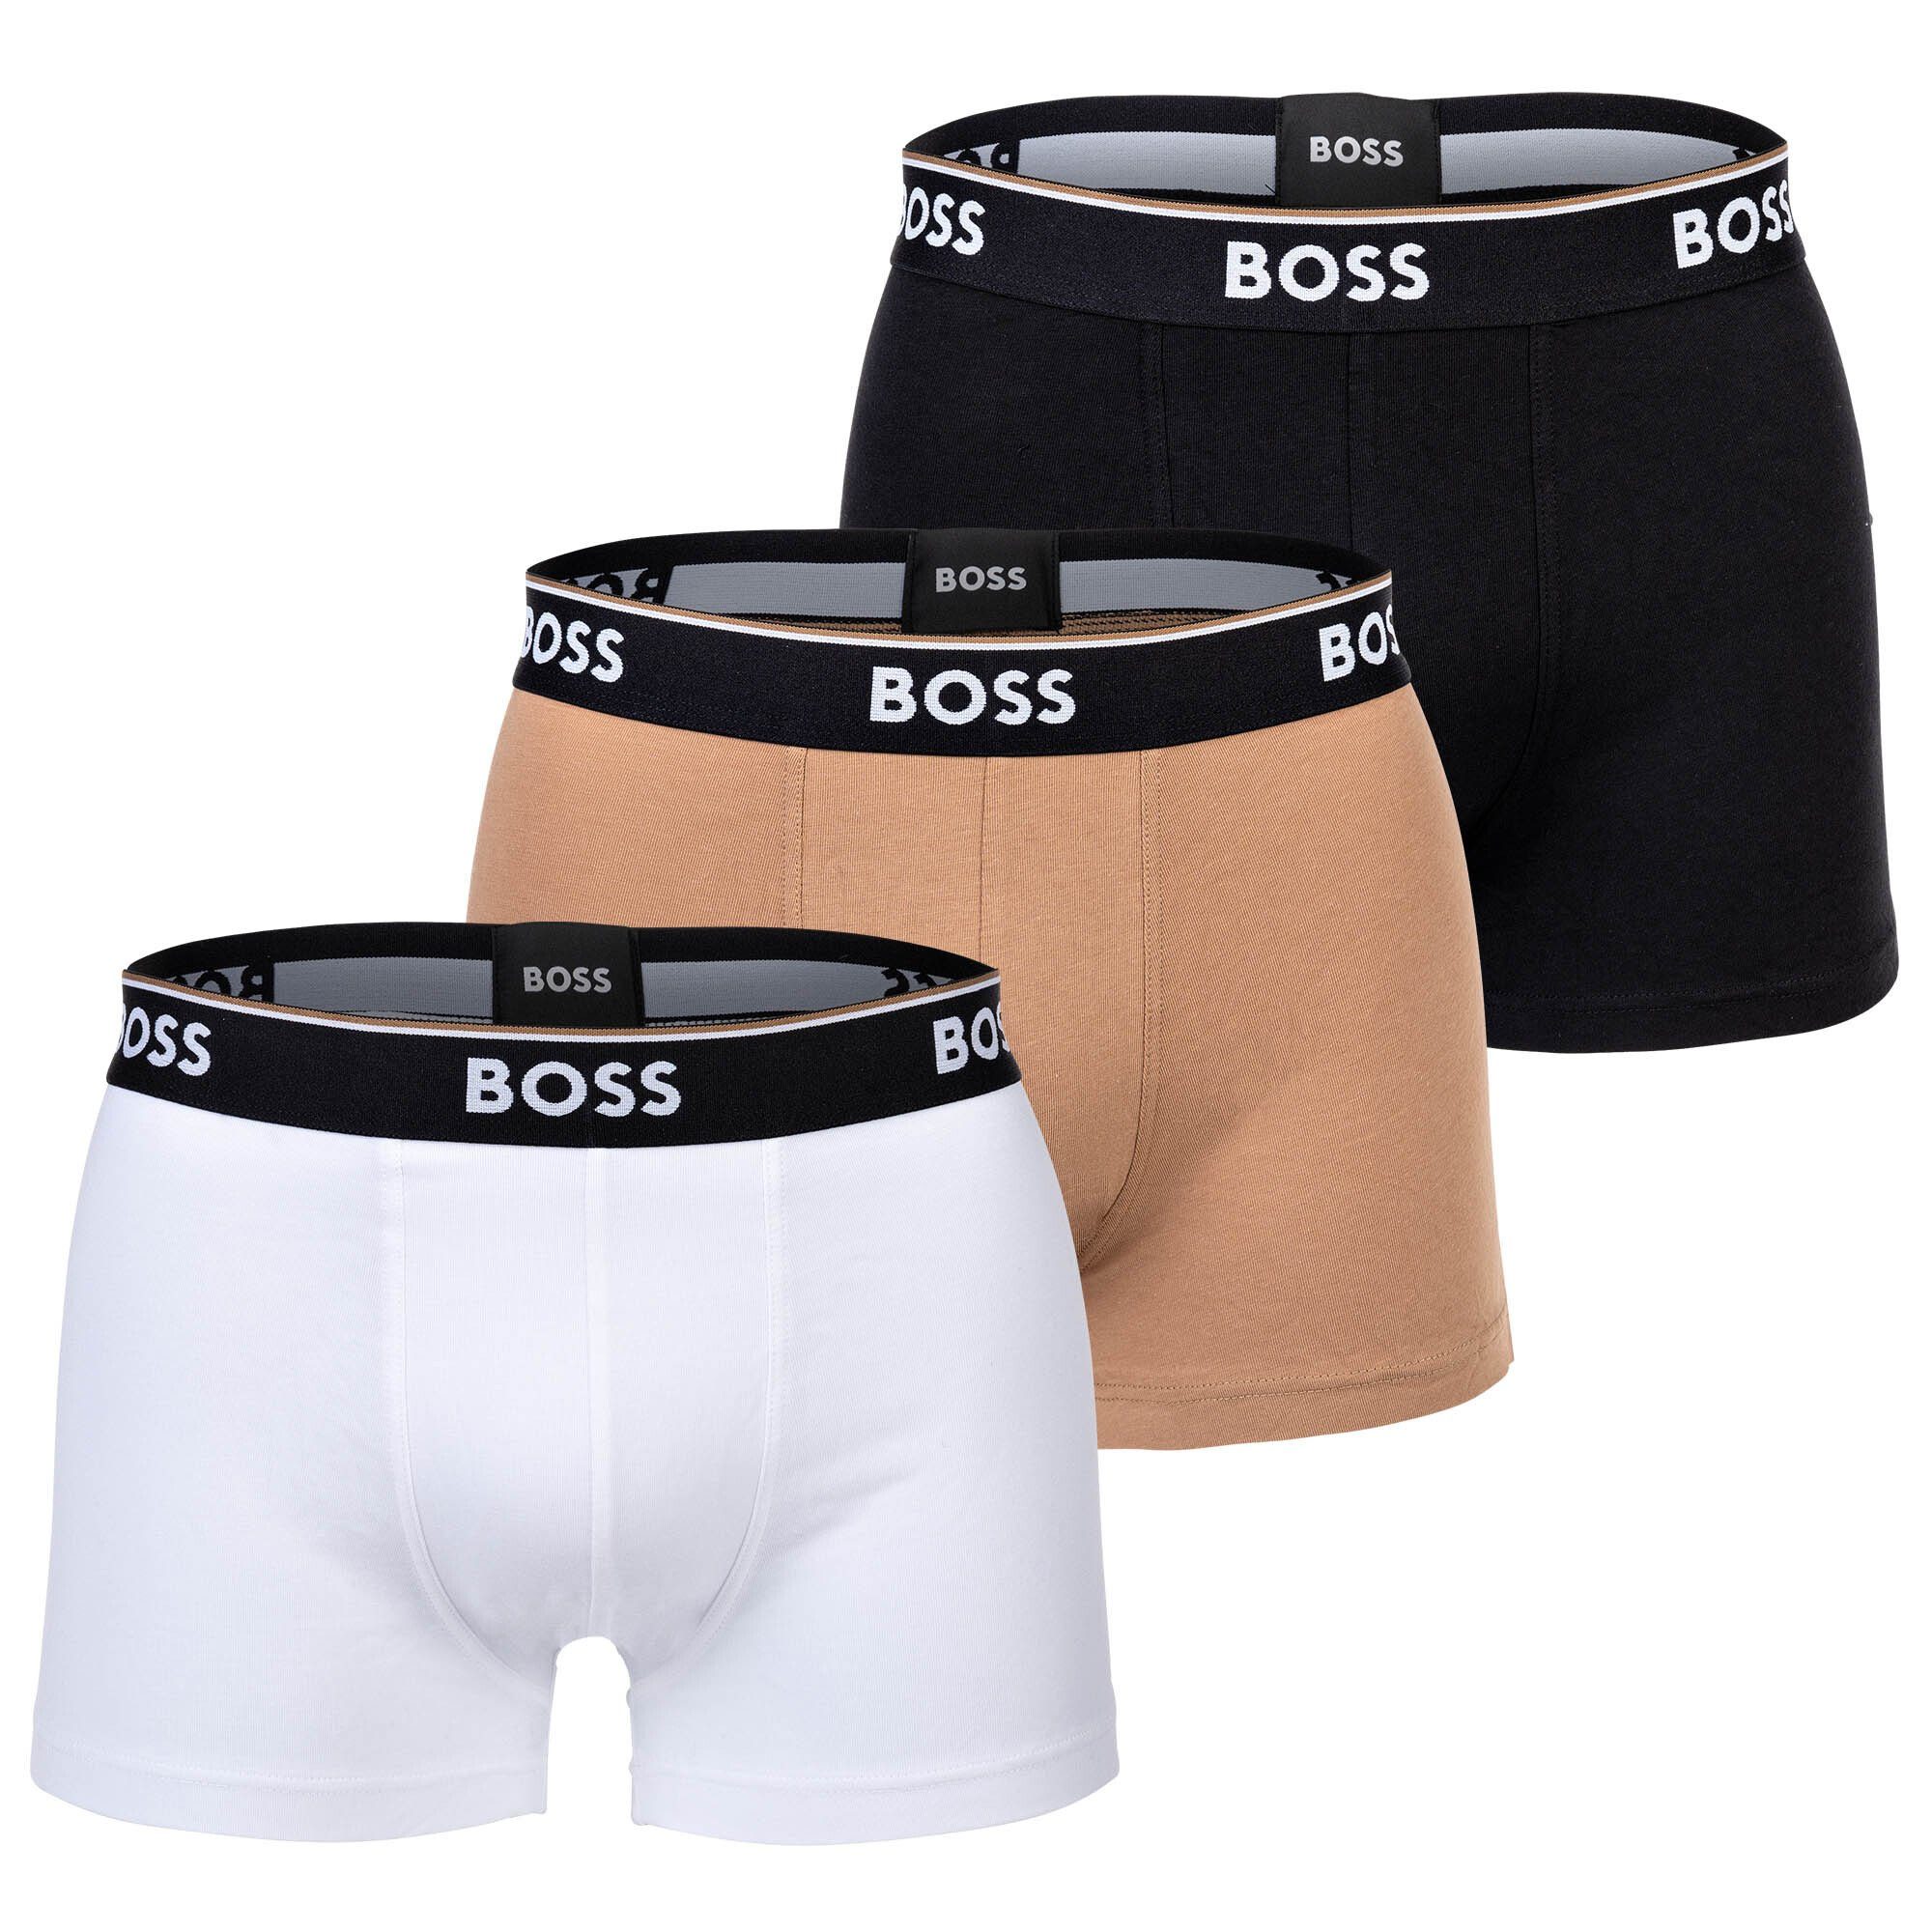 BOSS Boxer Herren Trunks, 3er Power, - Boxershorts 3P Schwarz/Braun/Weiß Pack